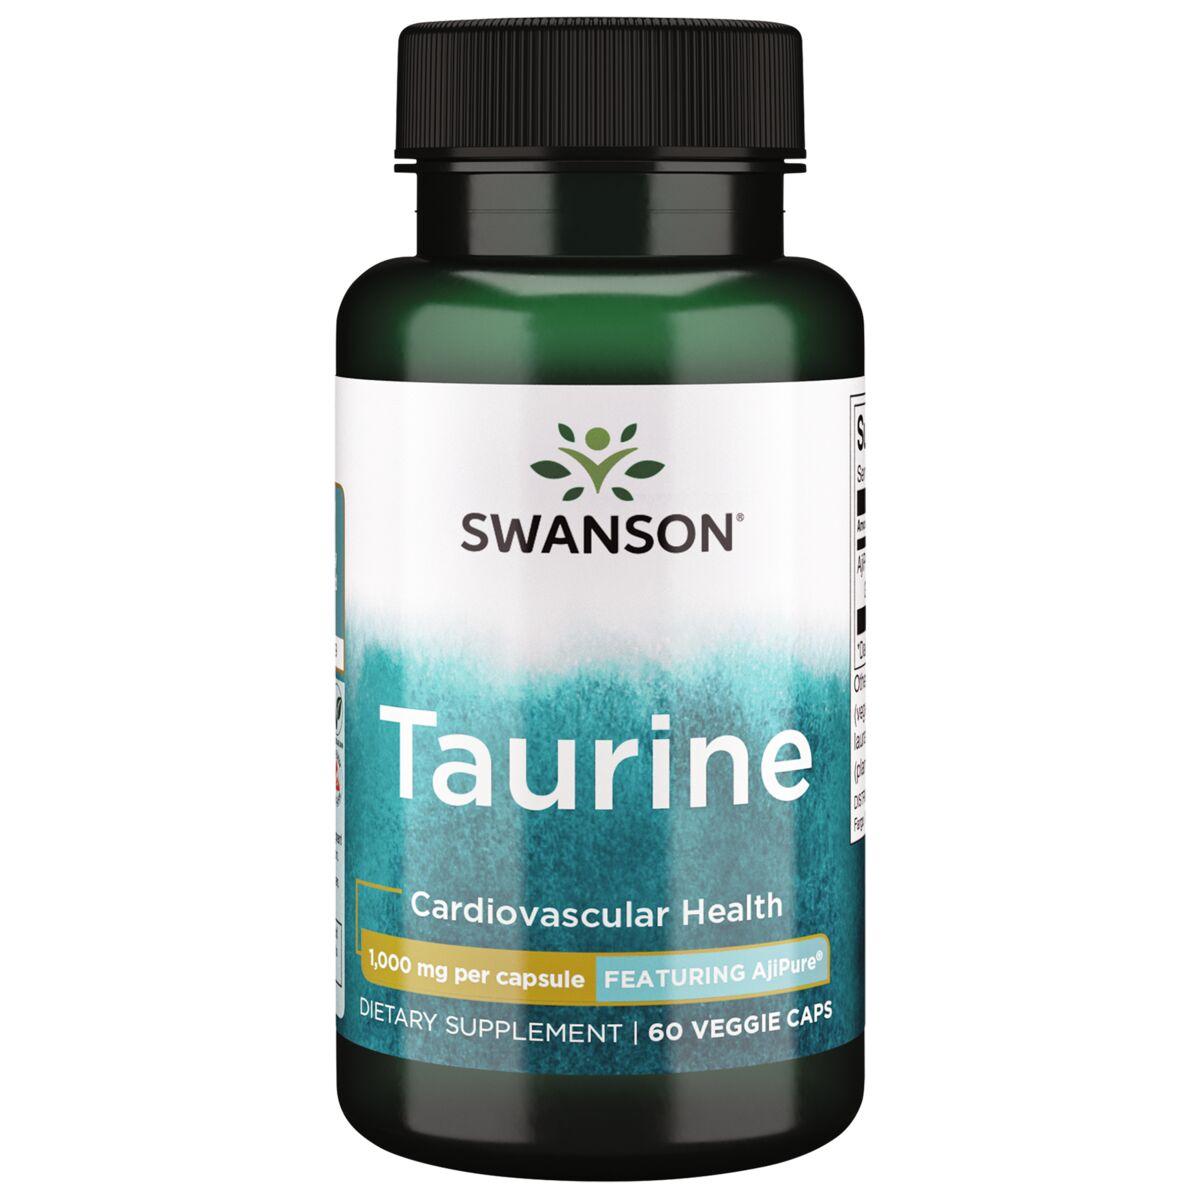 Swanson Ultra Taurine - Featuring Ajipure Supplement Vitamin | 1000 mg | 60 Veg Caps